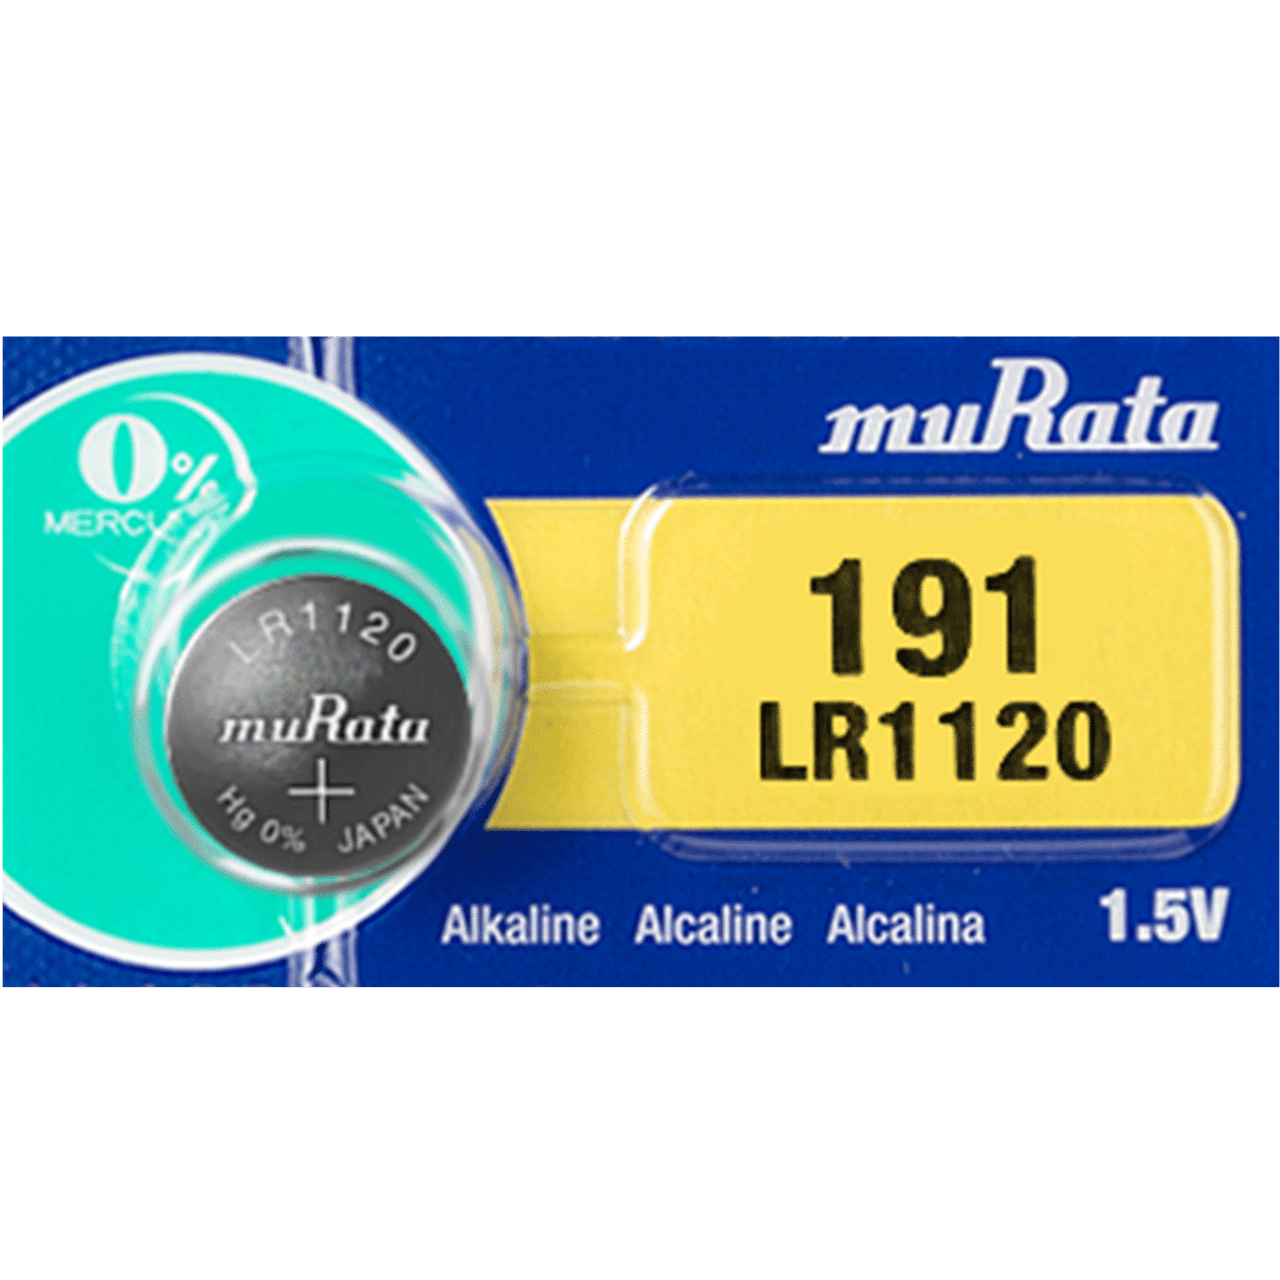 191-MU-C5 - Murata 191/LR1120 1.5V Alkaline Button Cell Battery (1/C5)